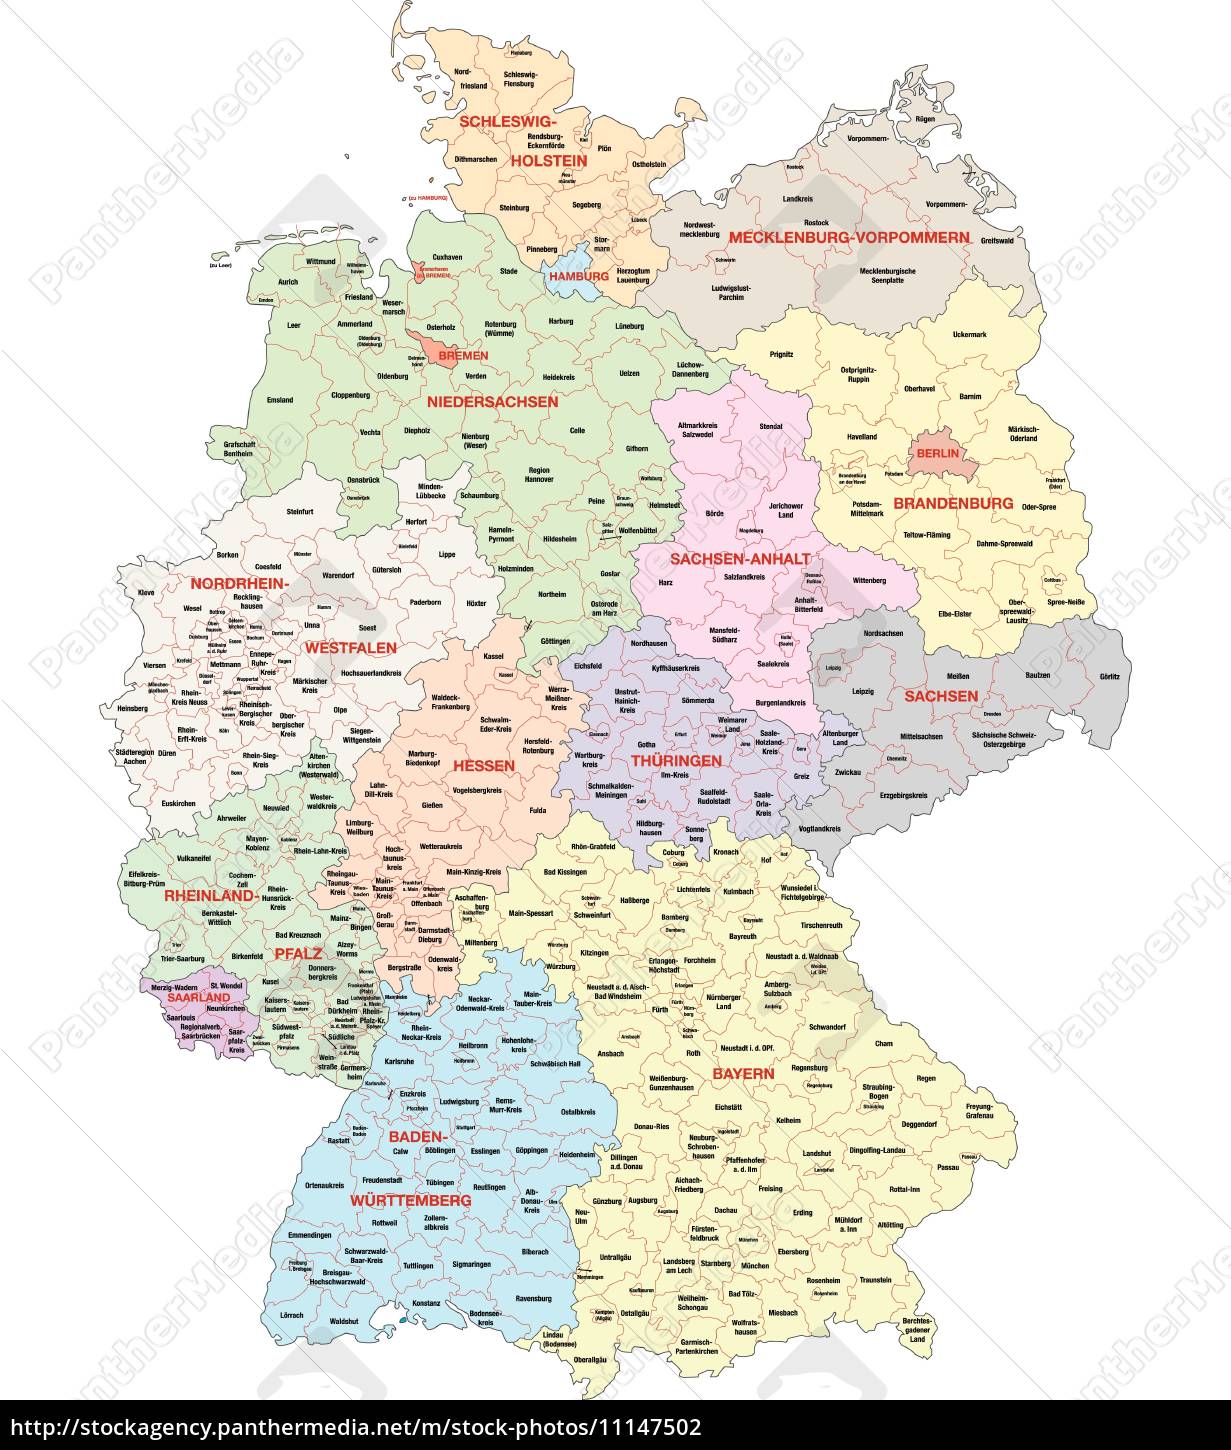 Tyskland Kort administrativ kort over tyskland   Stockphoto   #11147502  Tyskland Kort